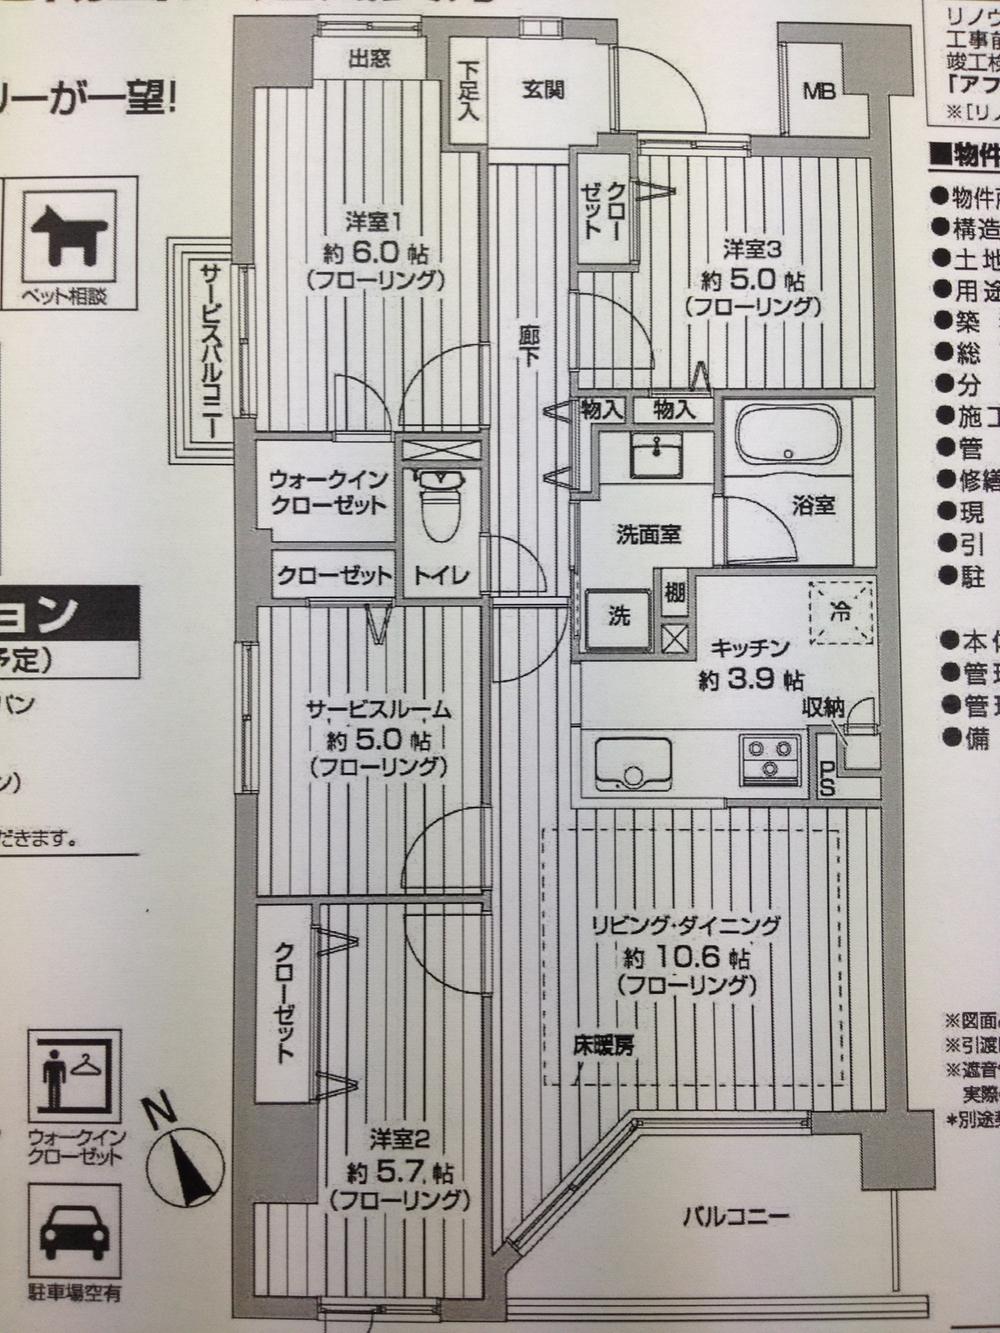 Floor plan. 3LDK + S (storeroom), Price 36,990,000 yen, Occupied area 81.64 sq m , Balcony area 7.2 sq m